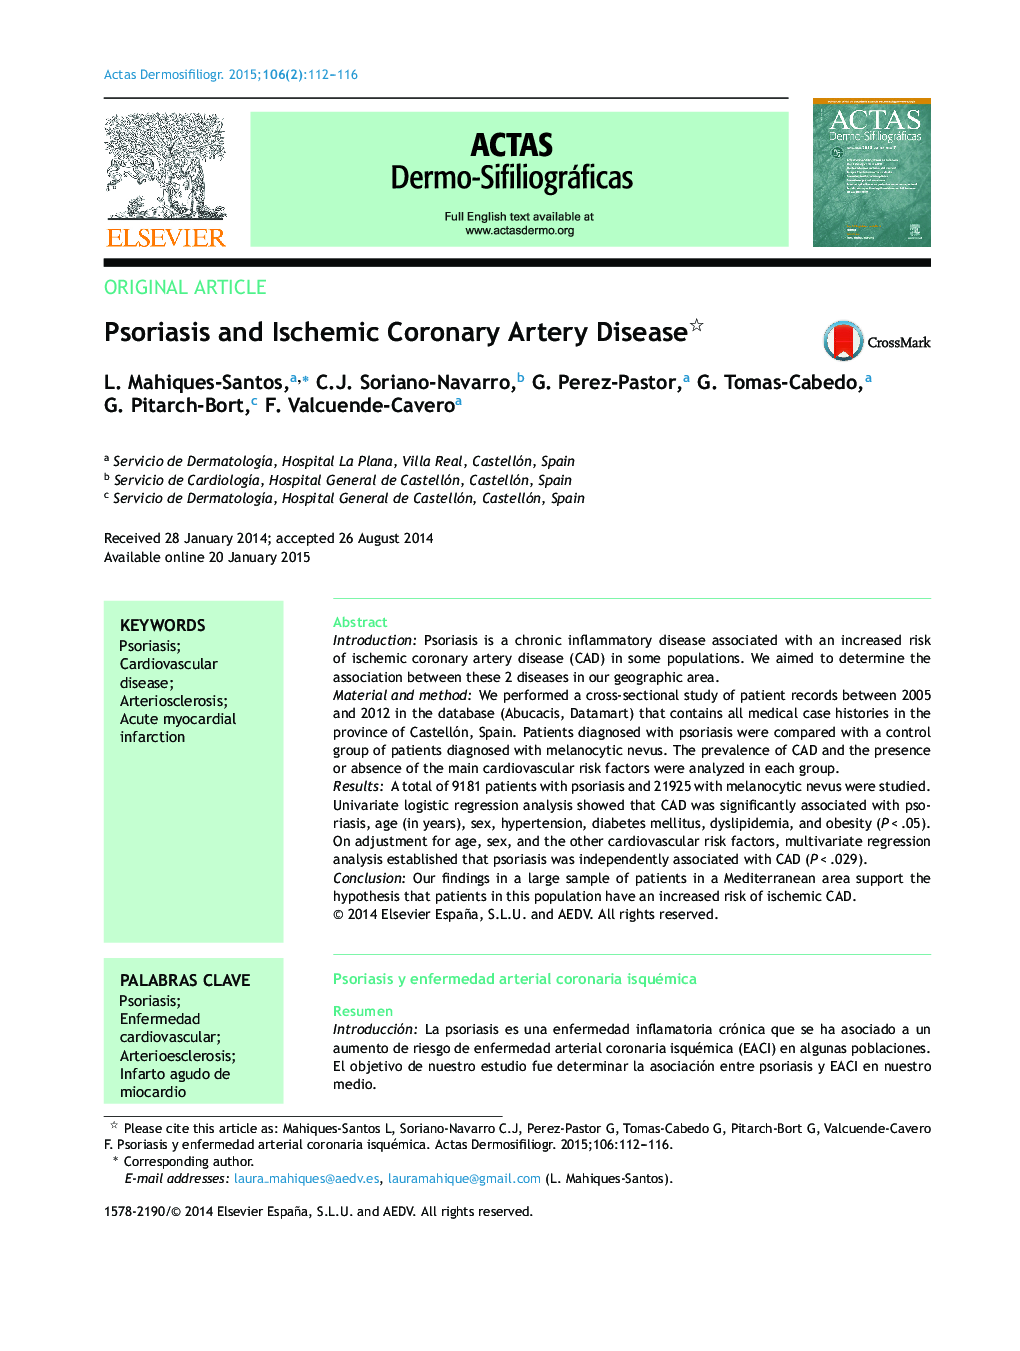 Psoriasis and Ischemic Coronary Artery Disease 